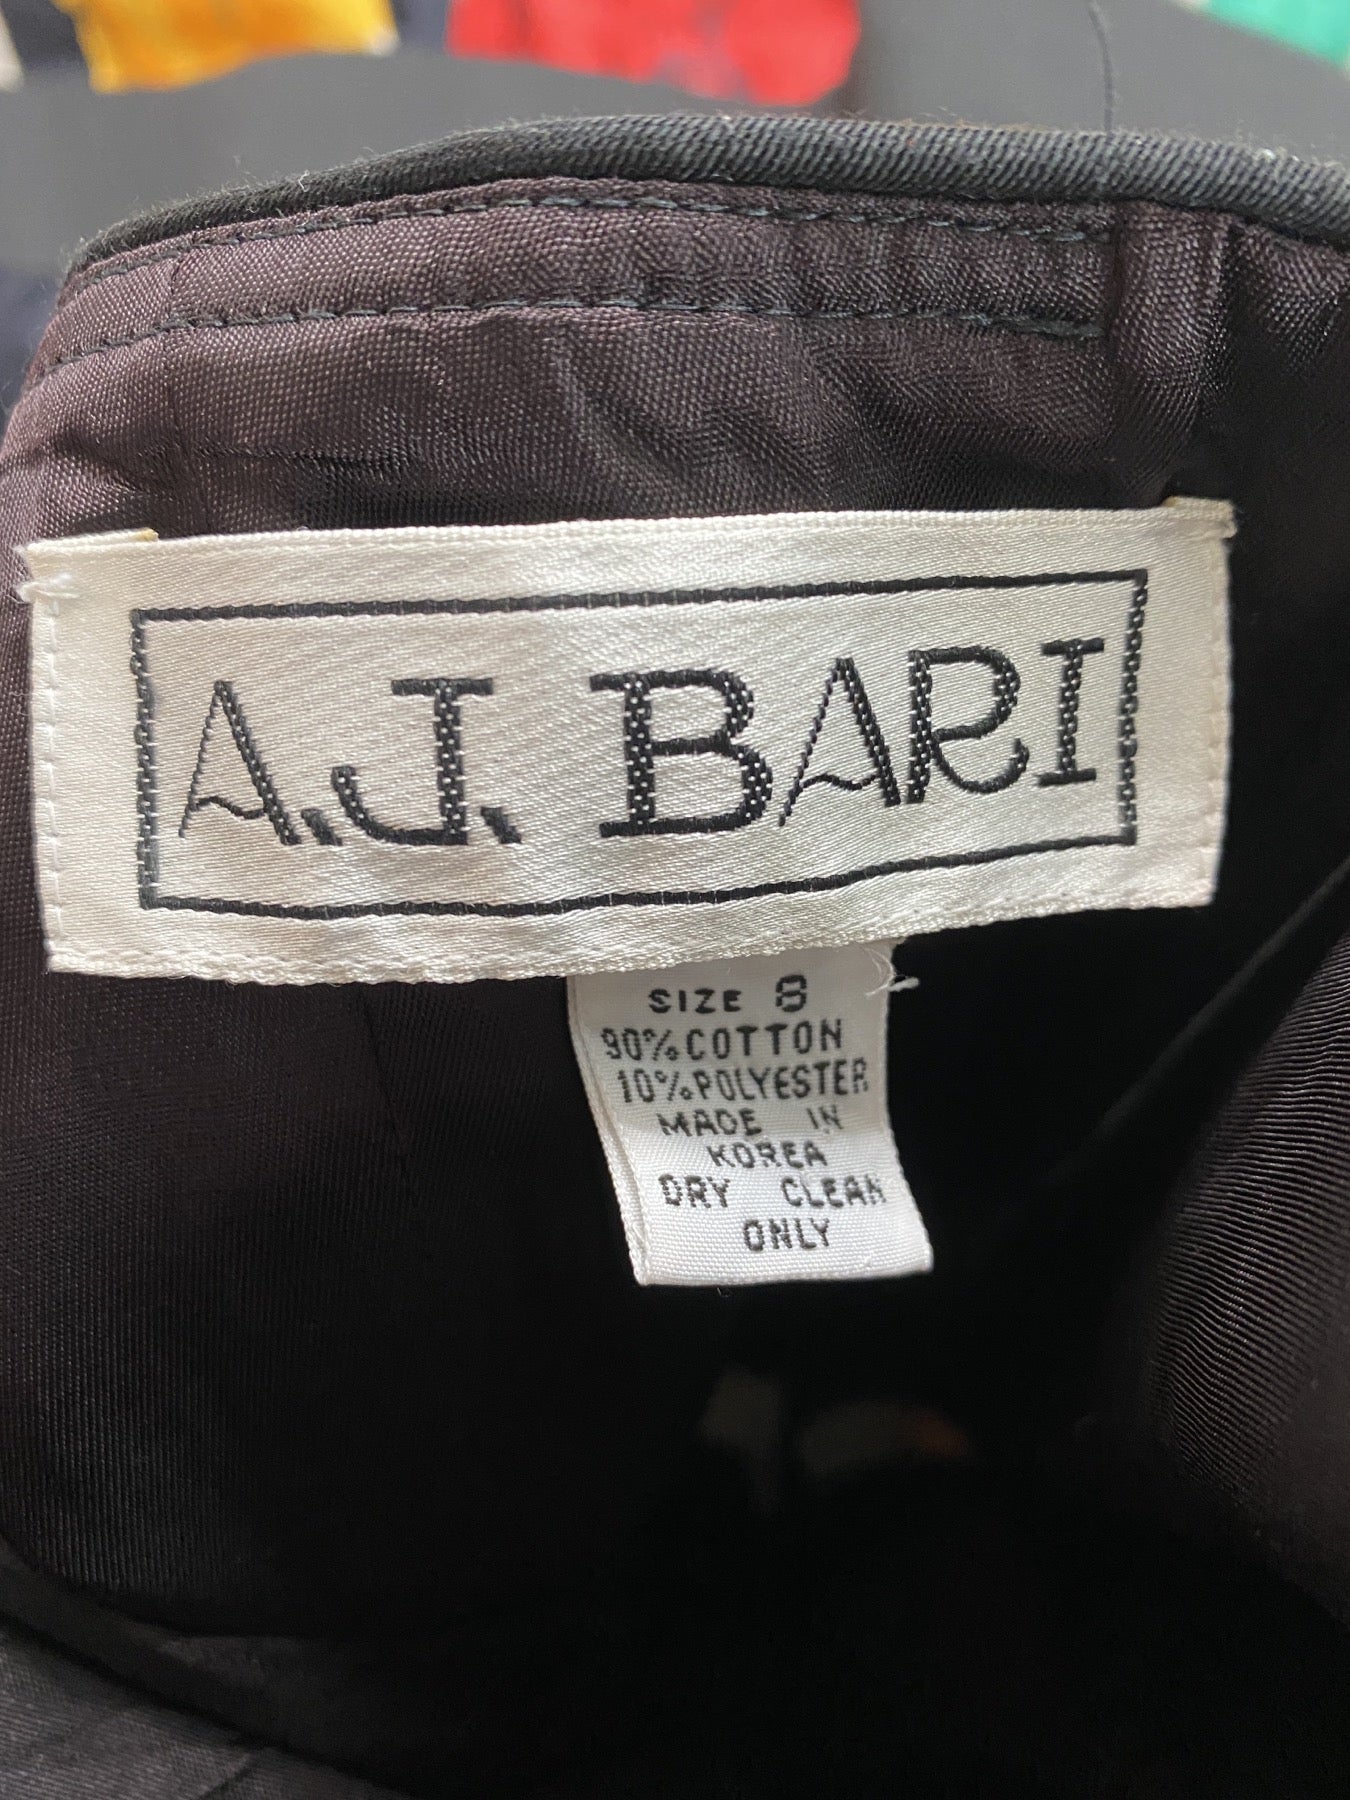 A.J. BARI STRIPED FLORAL STRAPLESS DRESS